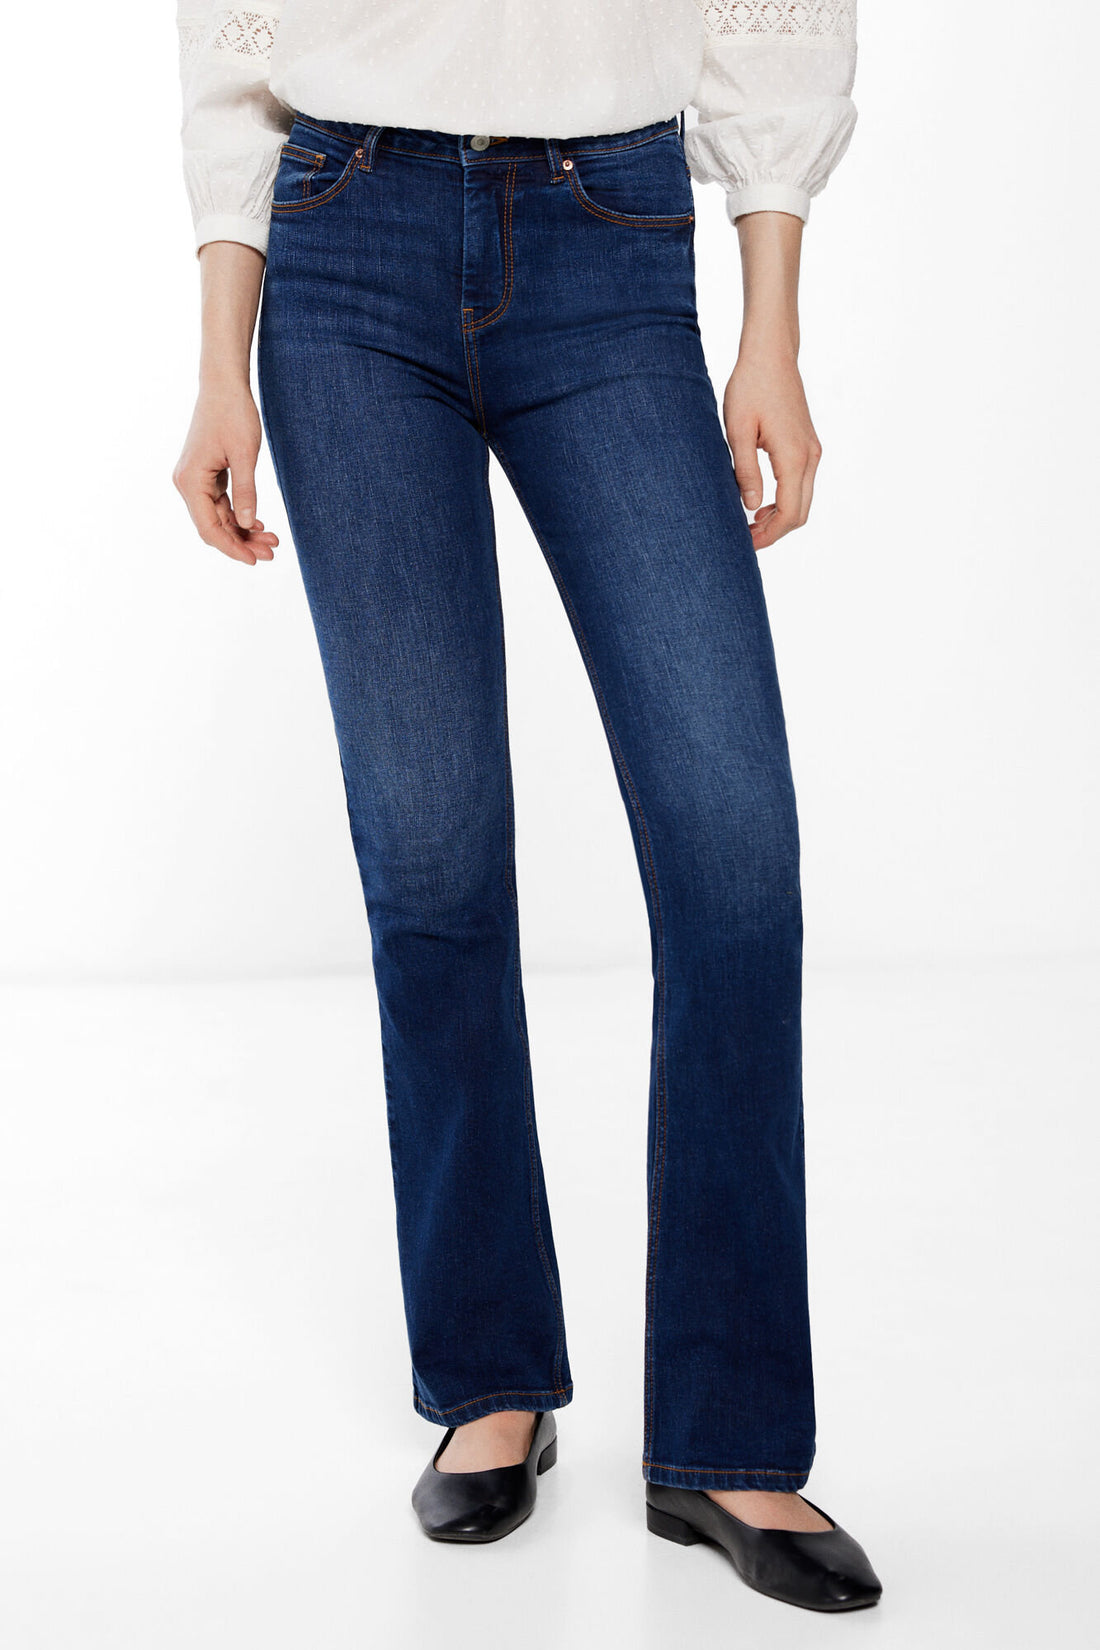 Low Waist Slim Fit Jeans_6827052_15_02